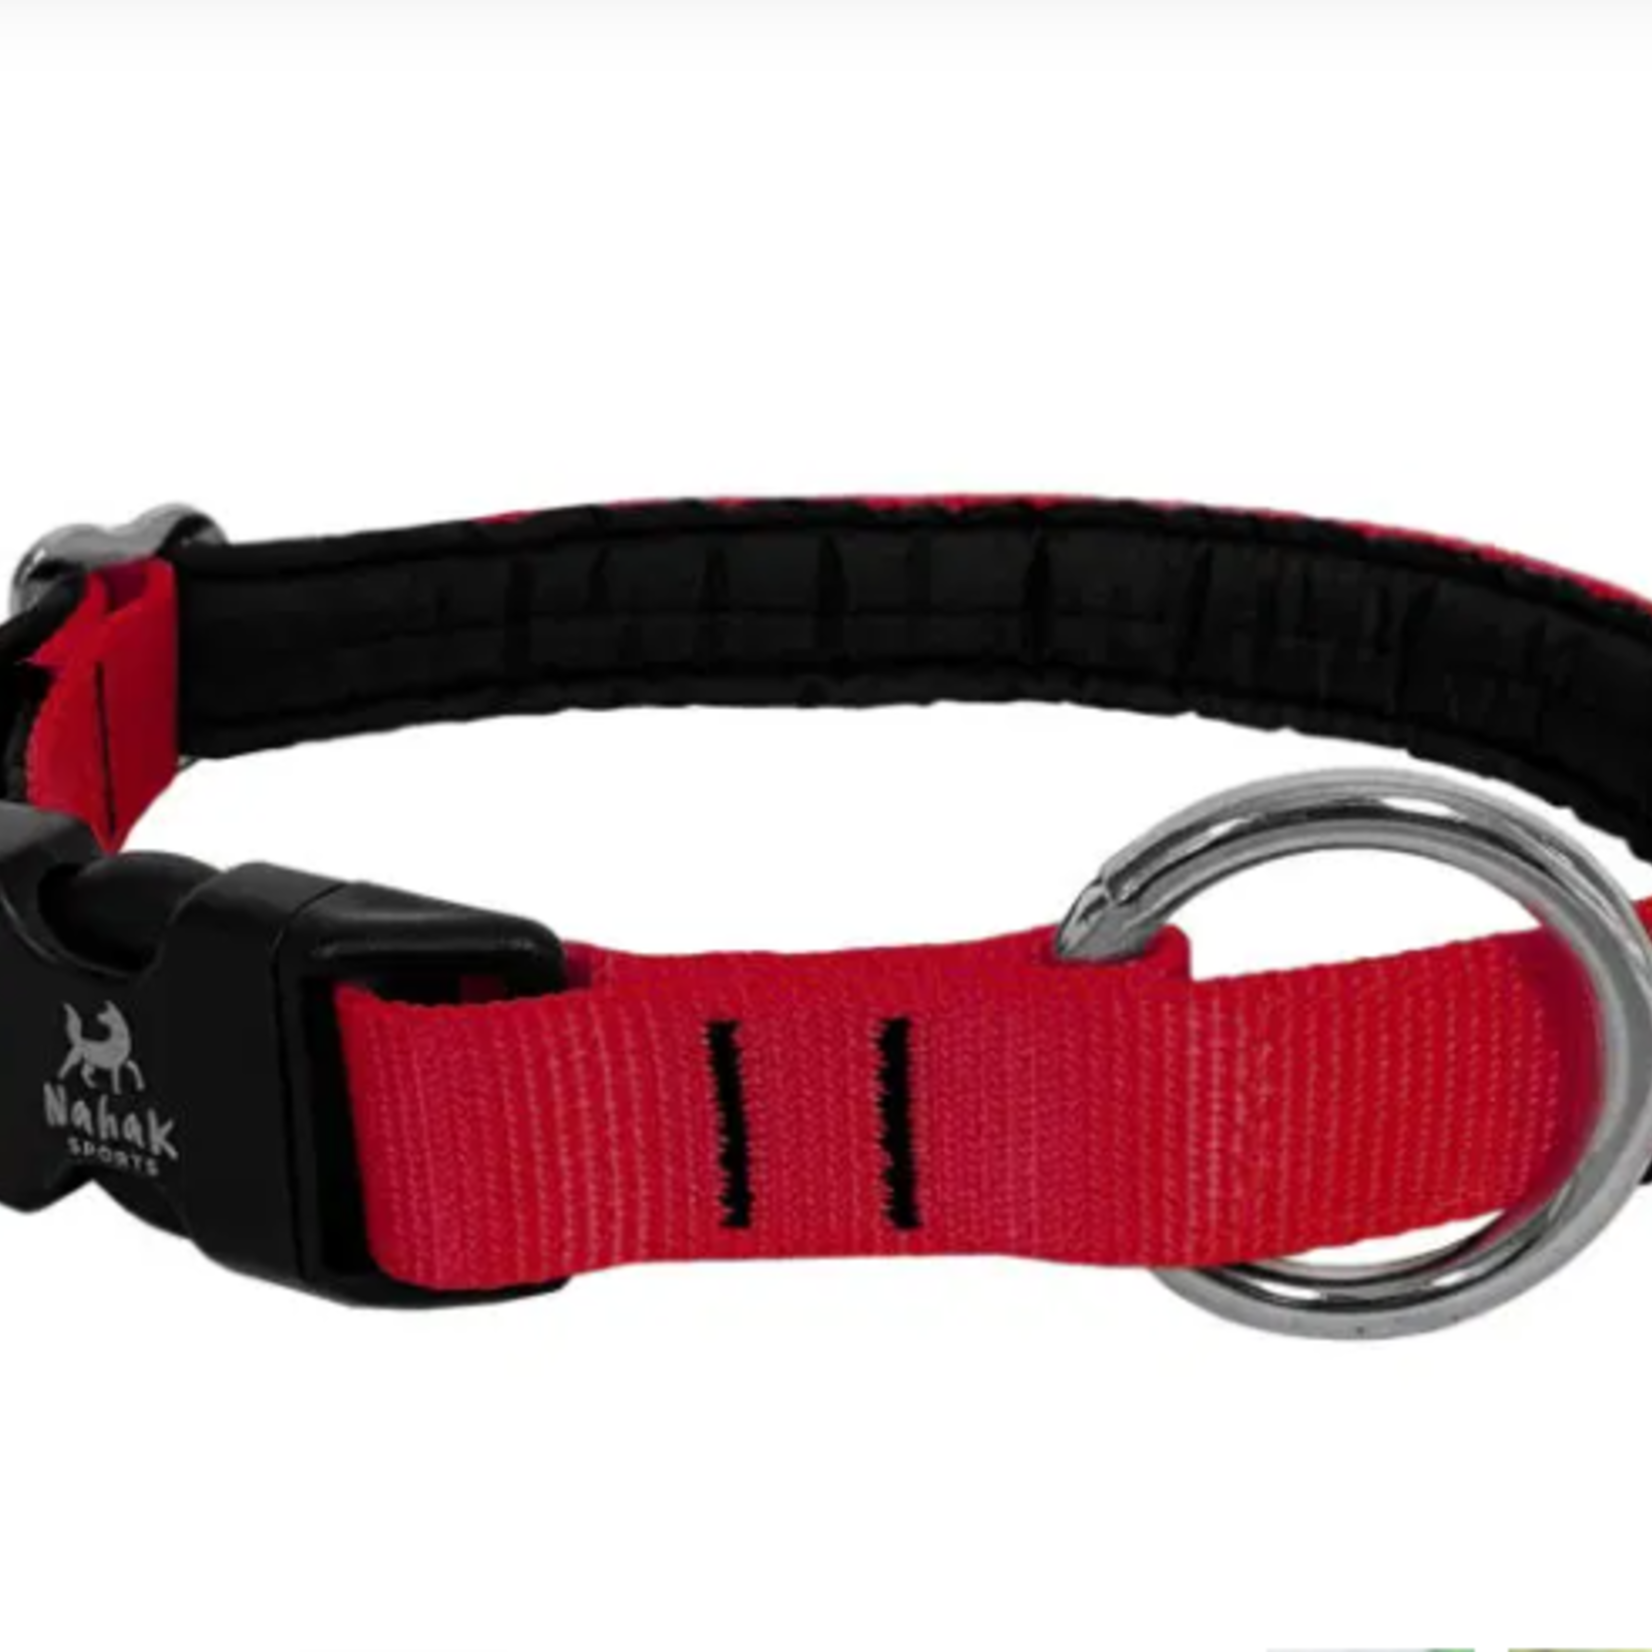 Nahak Padded Dog Collar With Clip